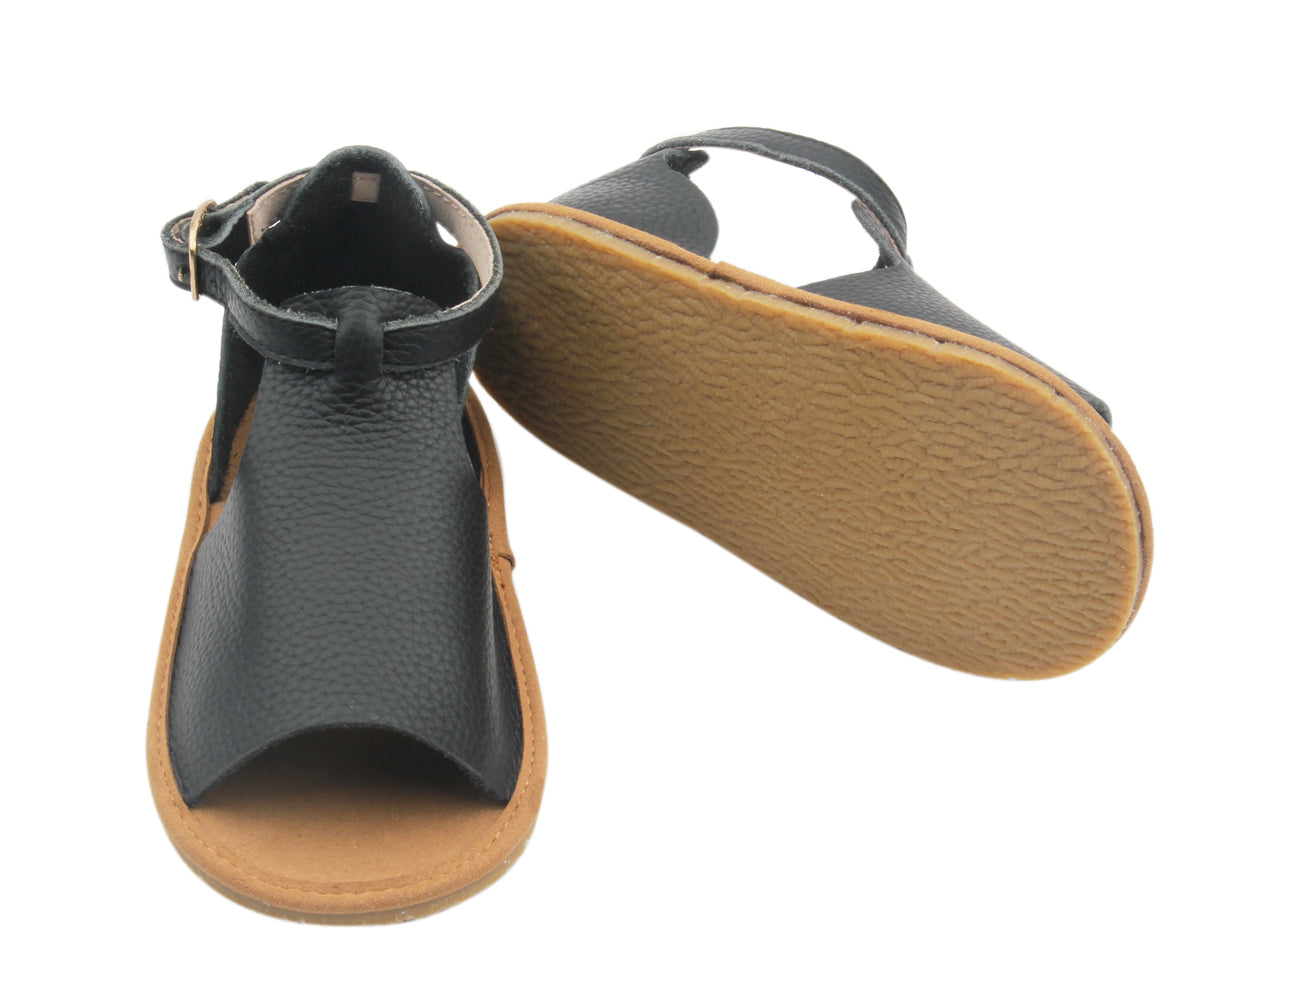 Jett Black Eldorado Sandals